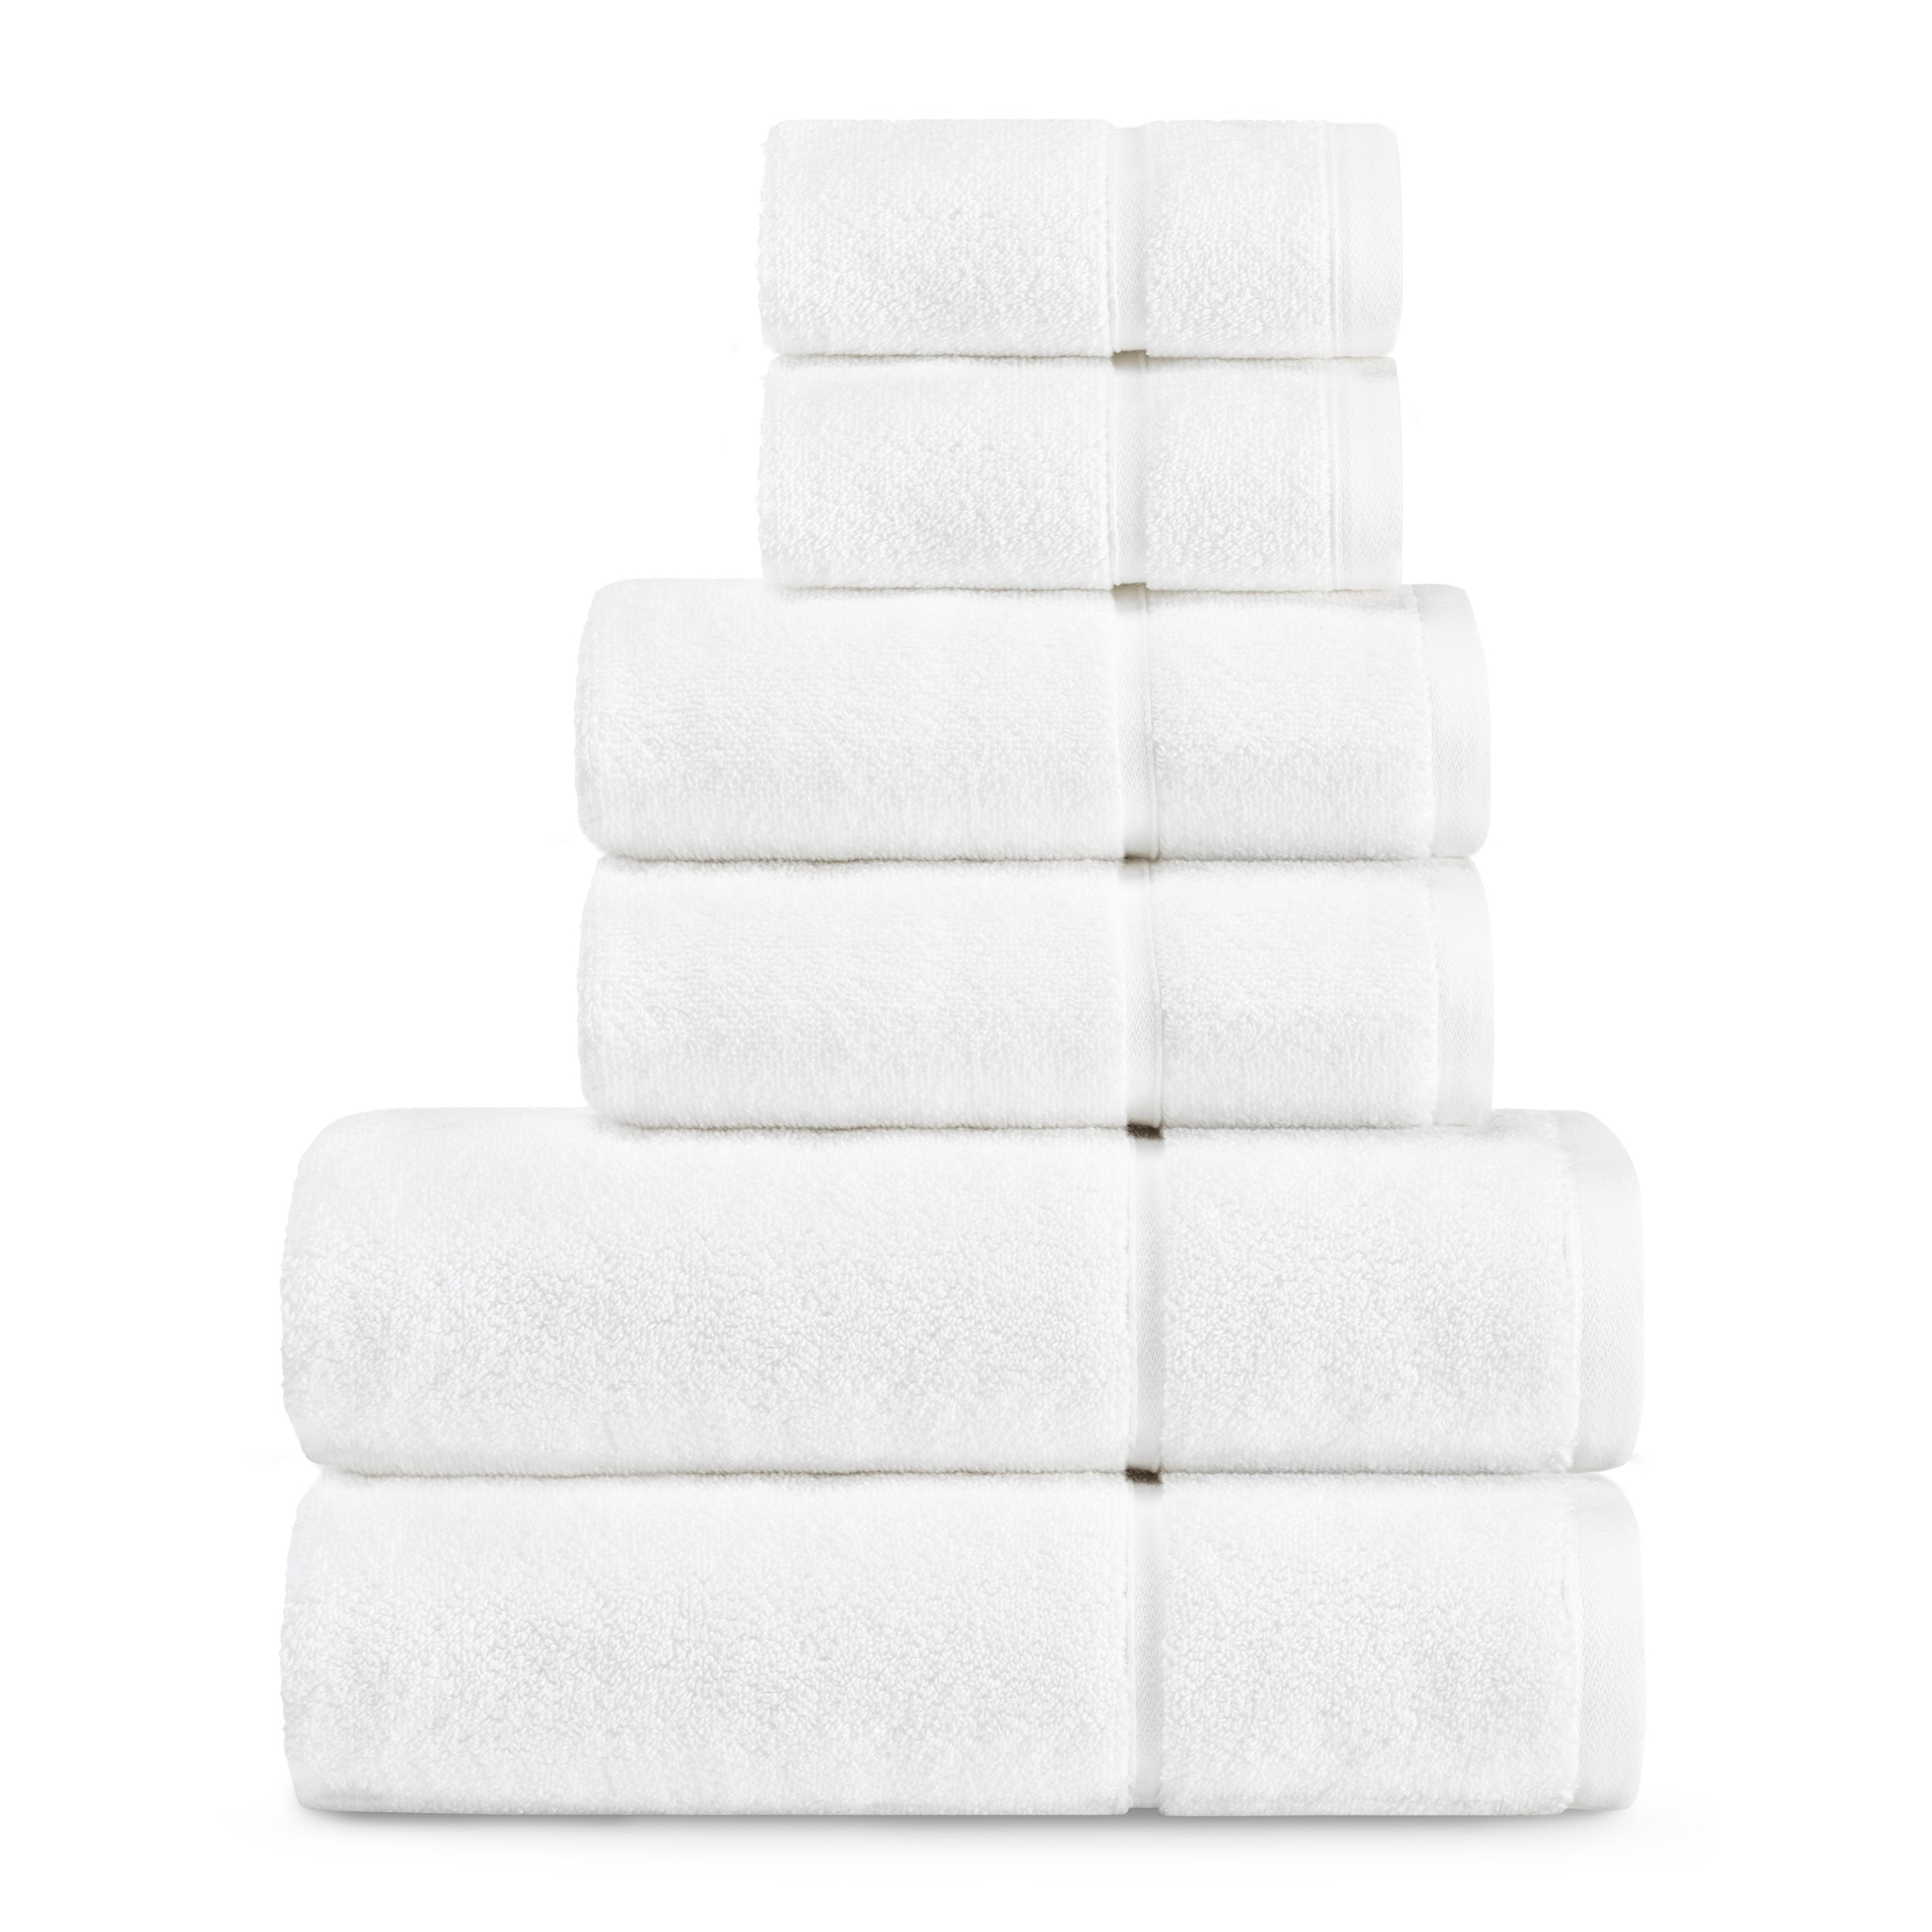 Vera Wang White Bath Towel Set / 6pcs / Diamond Pattern / NWTS